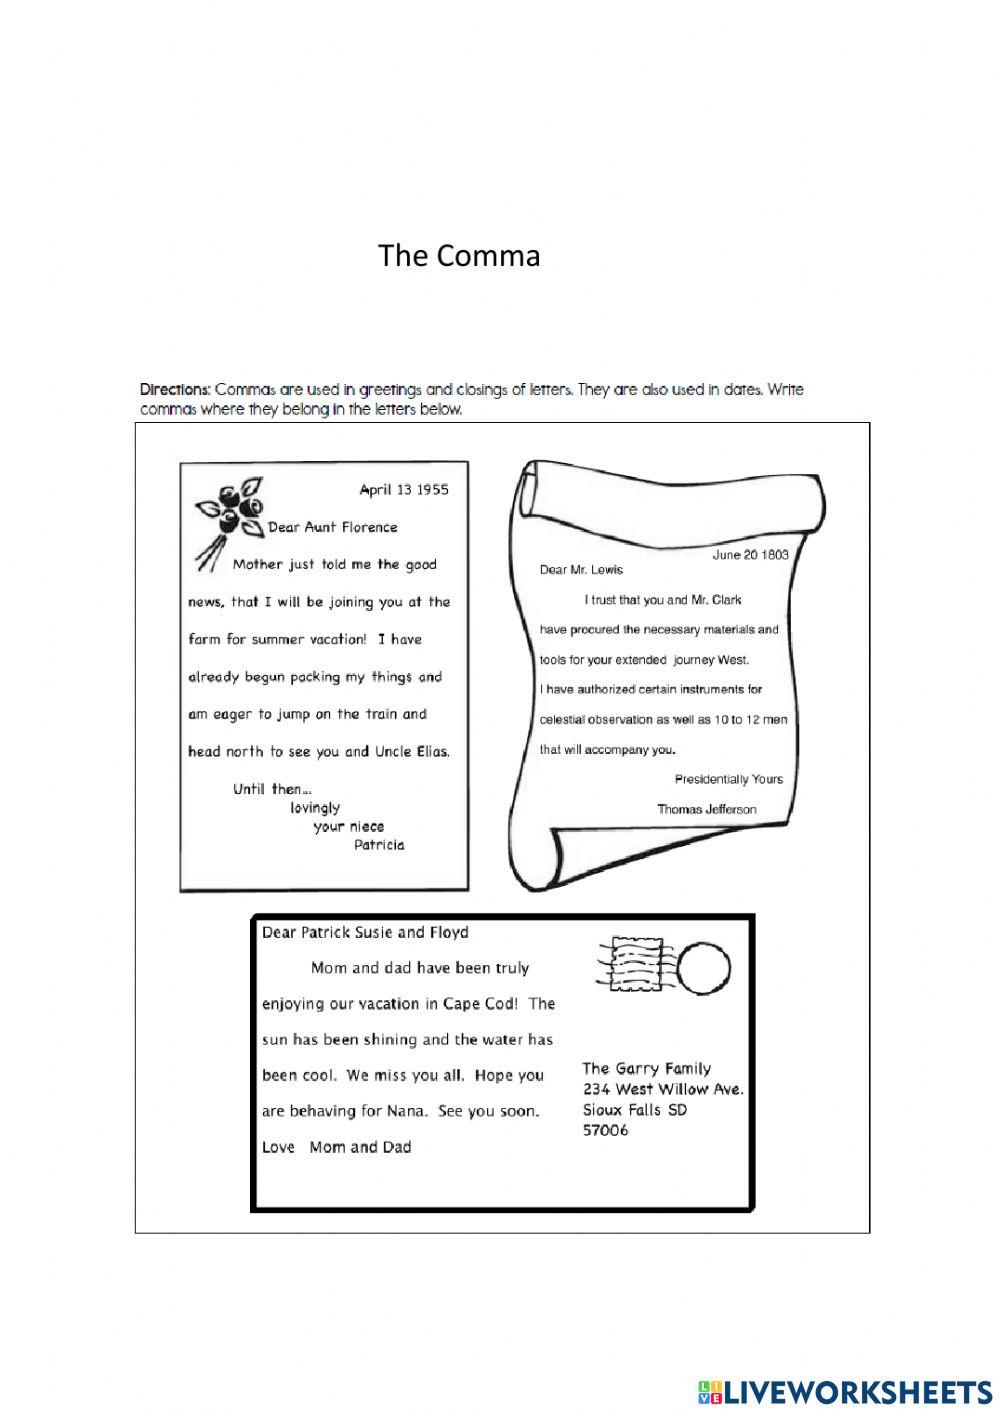 The Comma